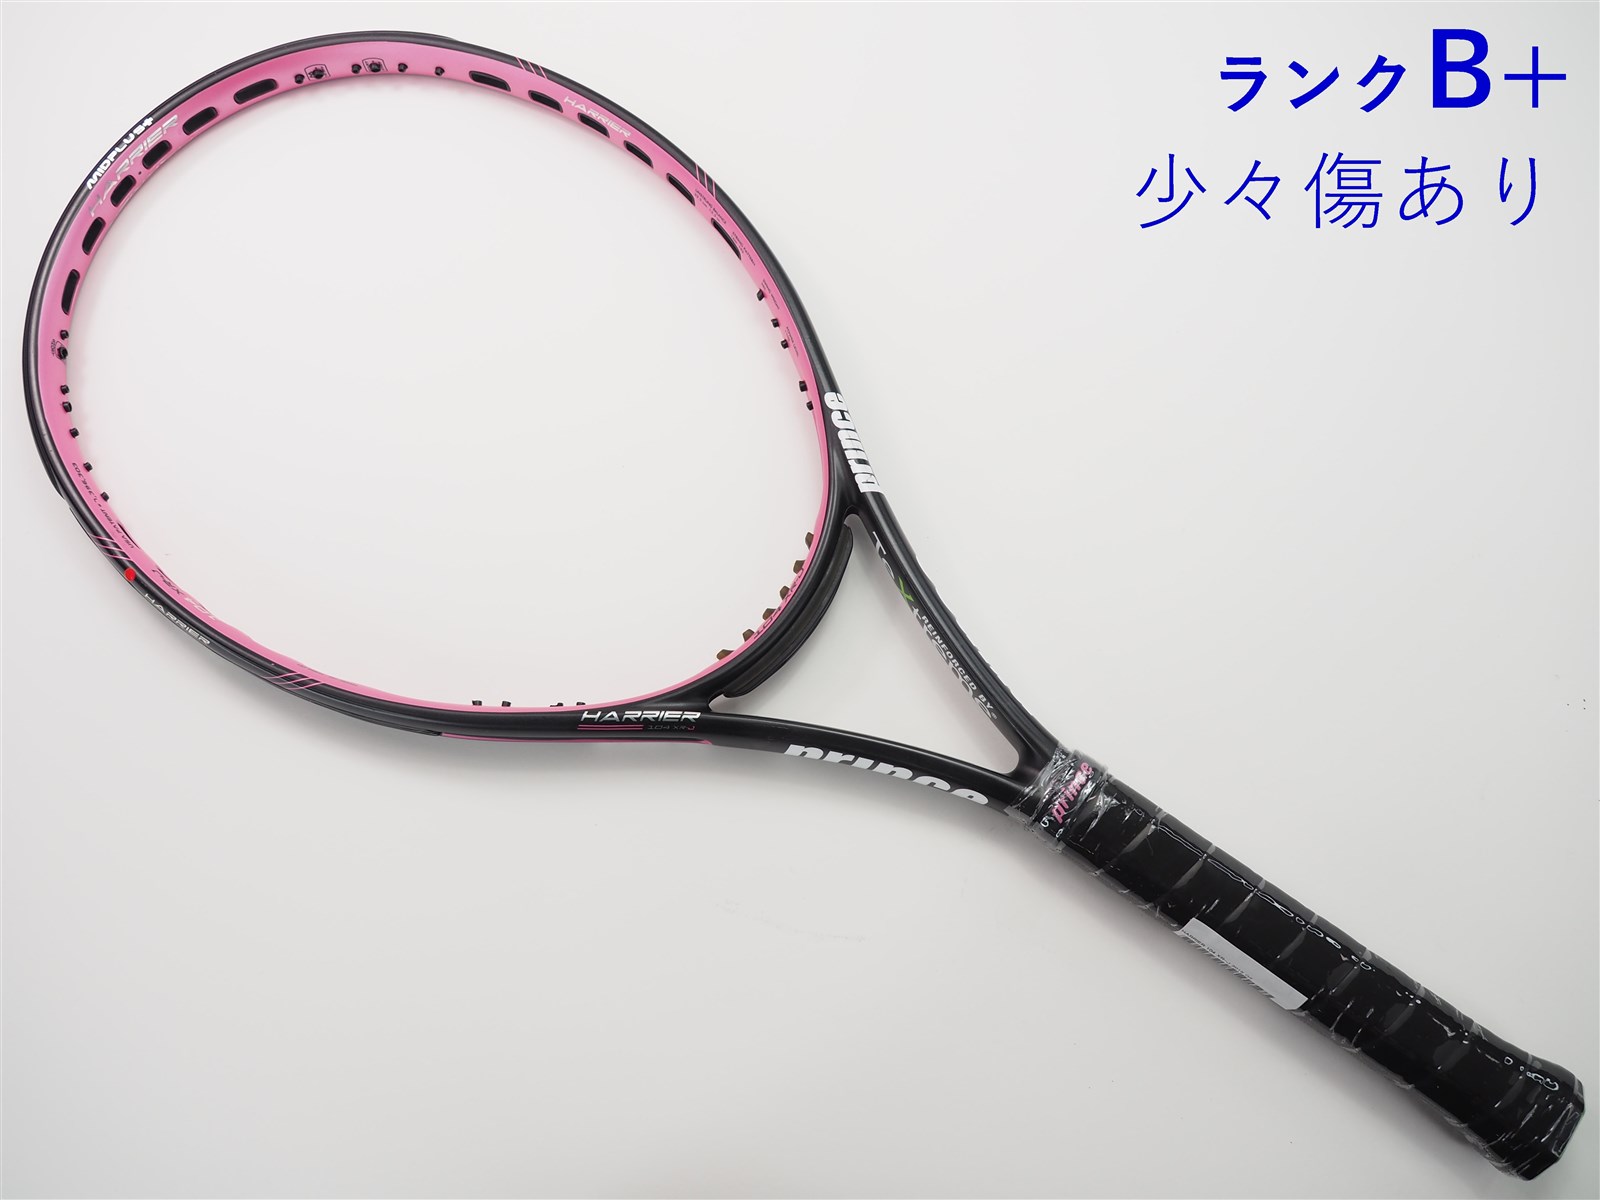 prince プリンス ハリアー 104 XR-J 硬式用 テニス ラケット-